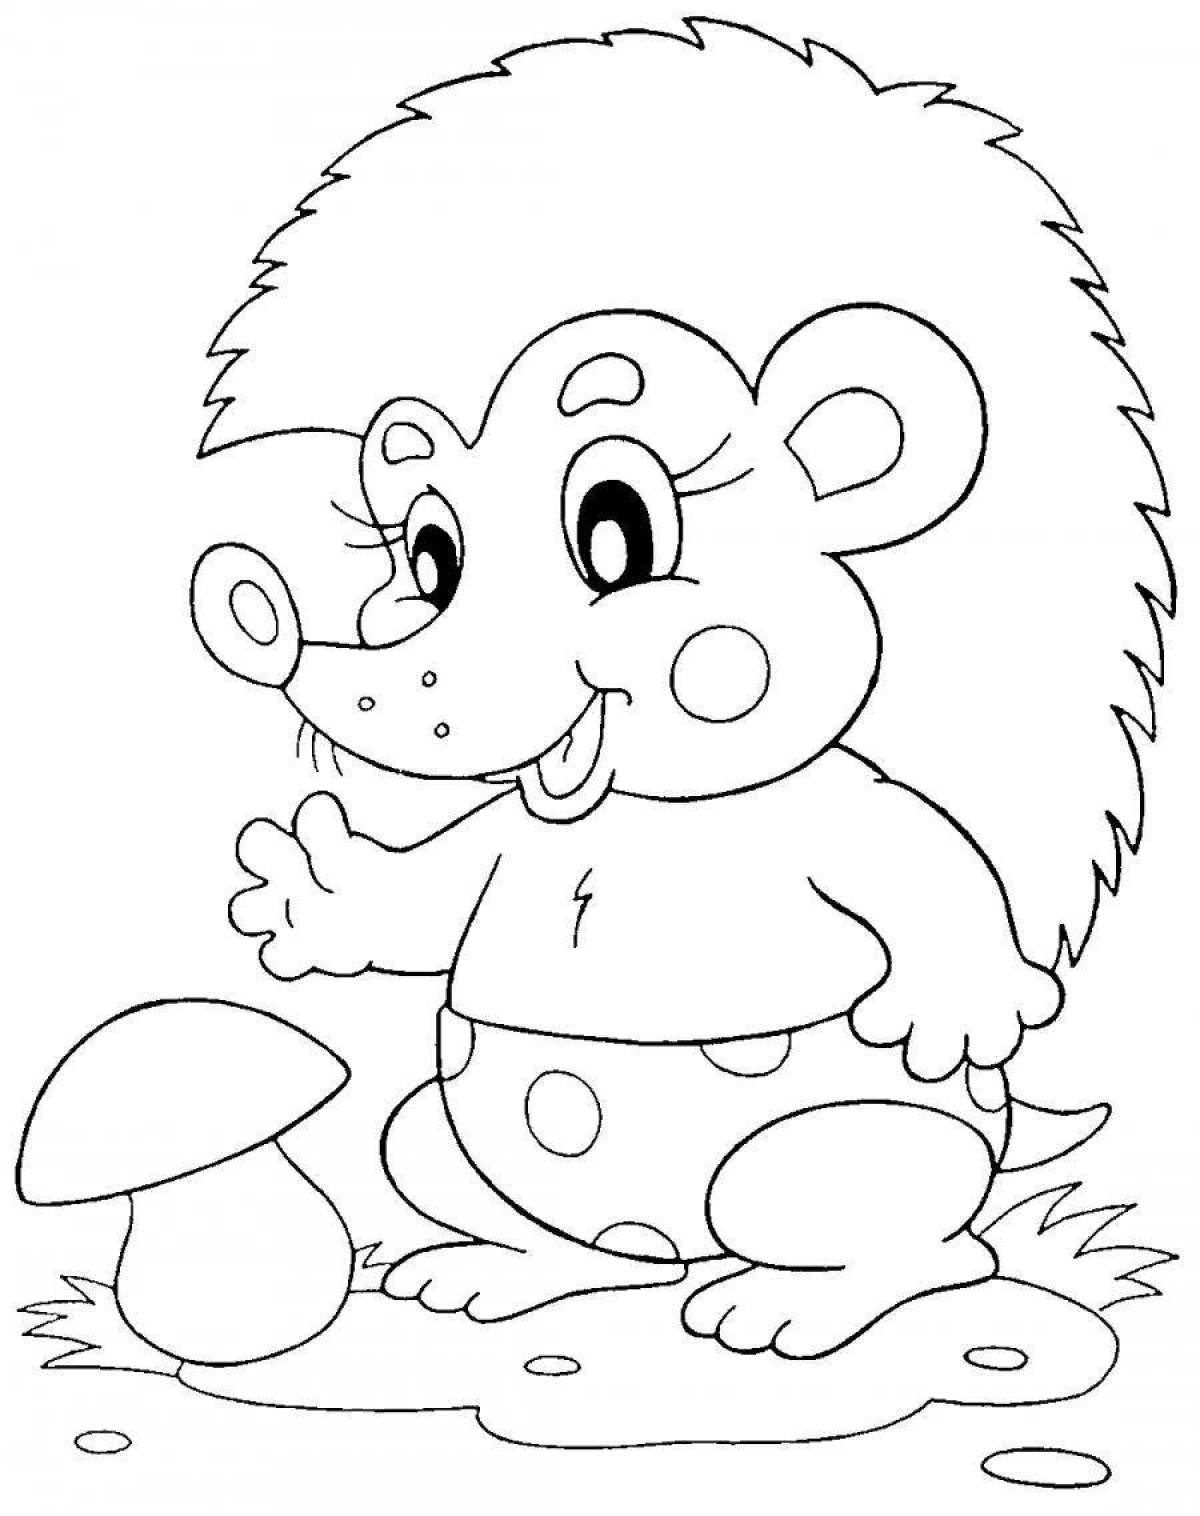 Adorable hedgehog coloring book for kids